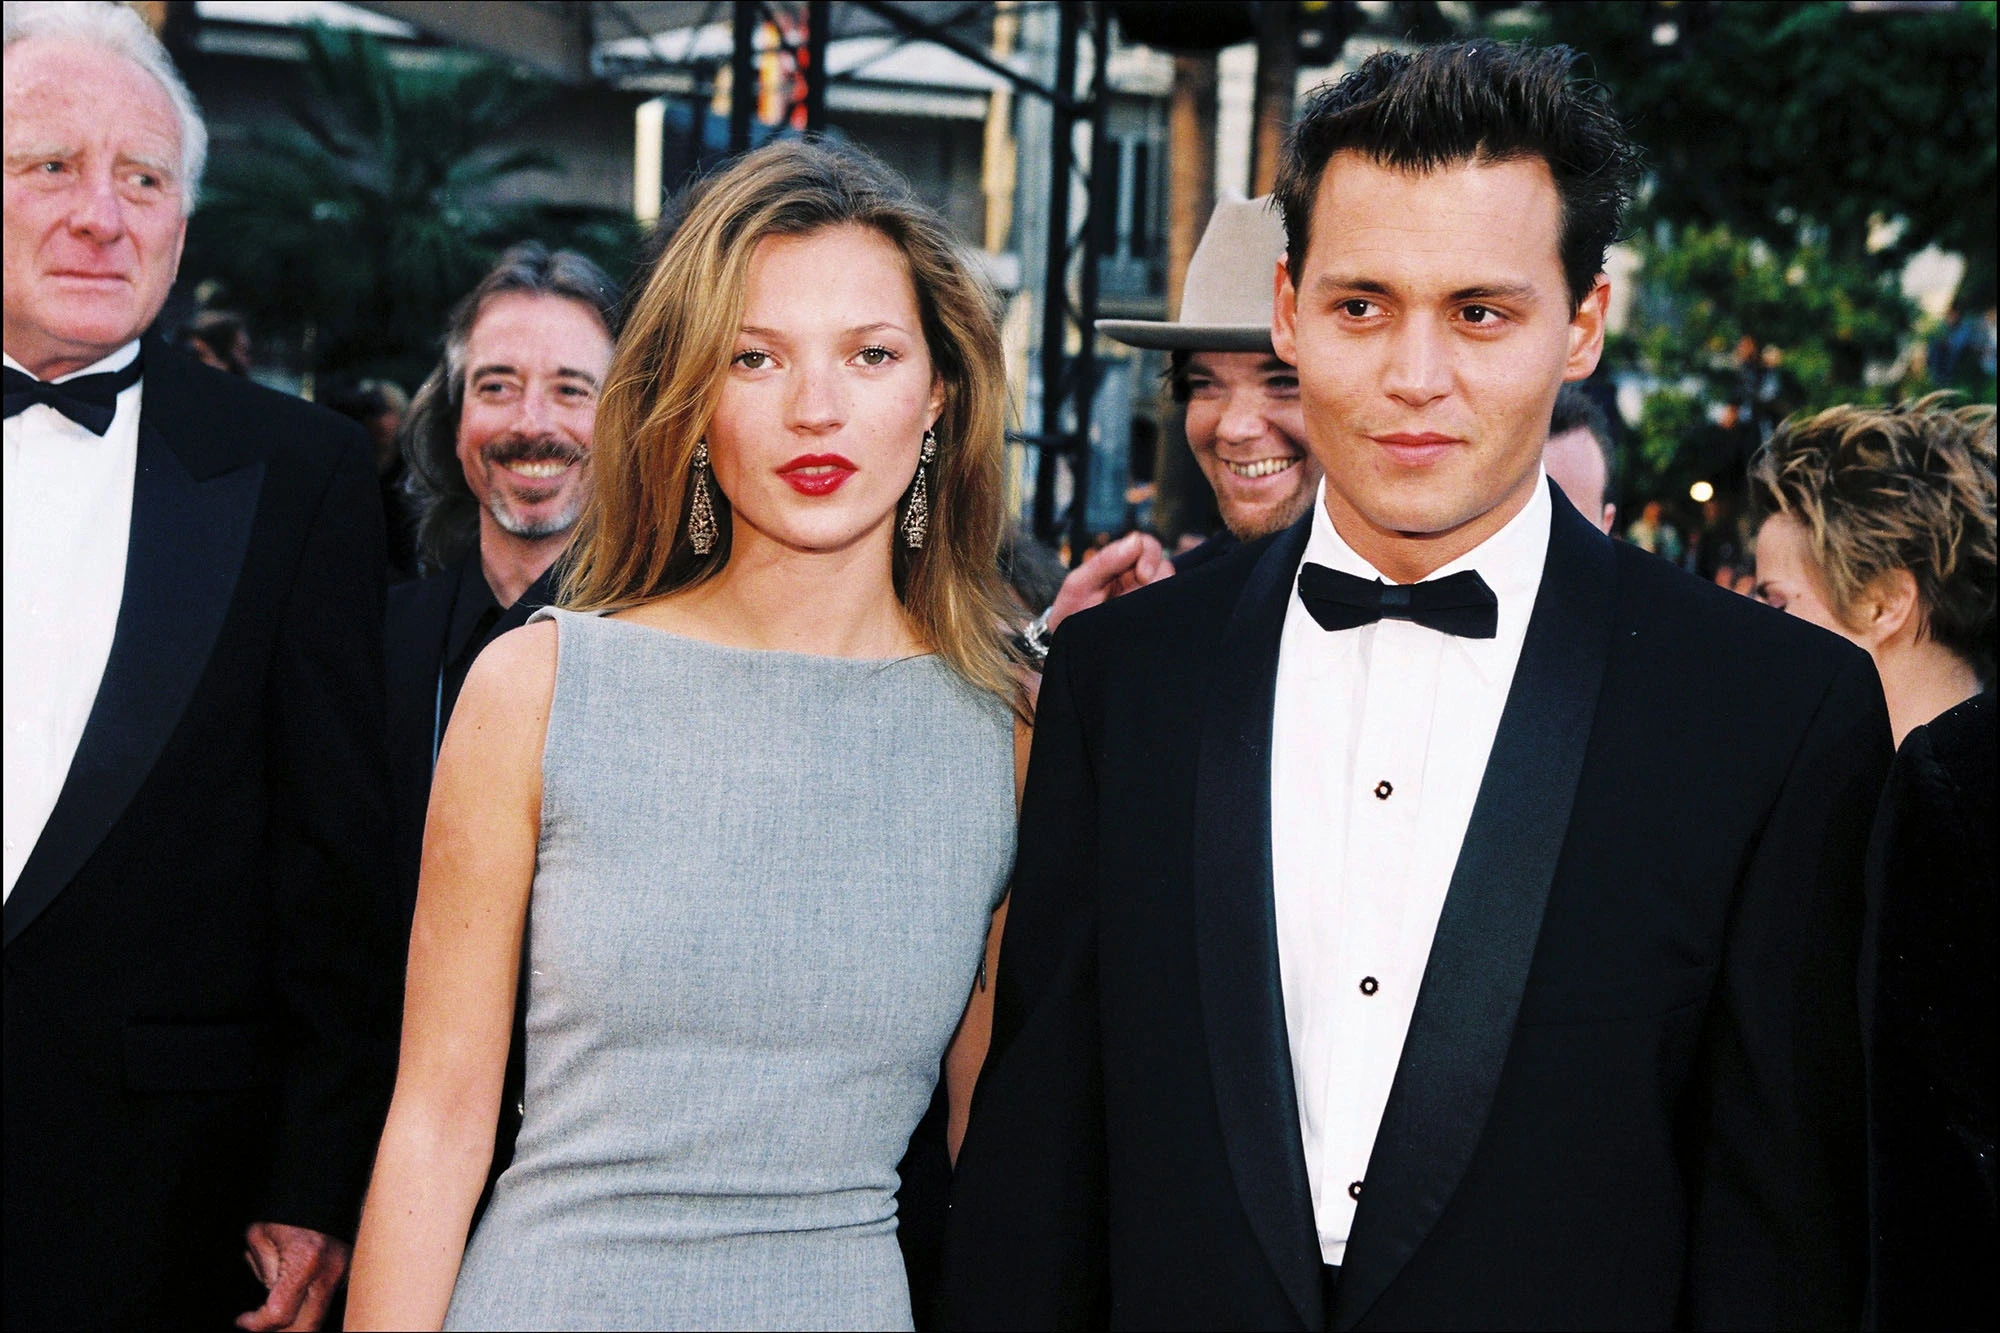 H Kate Moss θα καταθέσει ως μάρτυρας του Johnny Depp στην δίκη με την Amber Heard